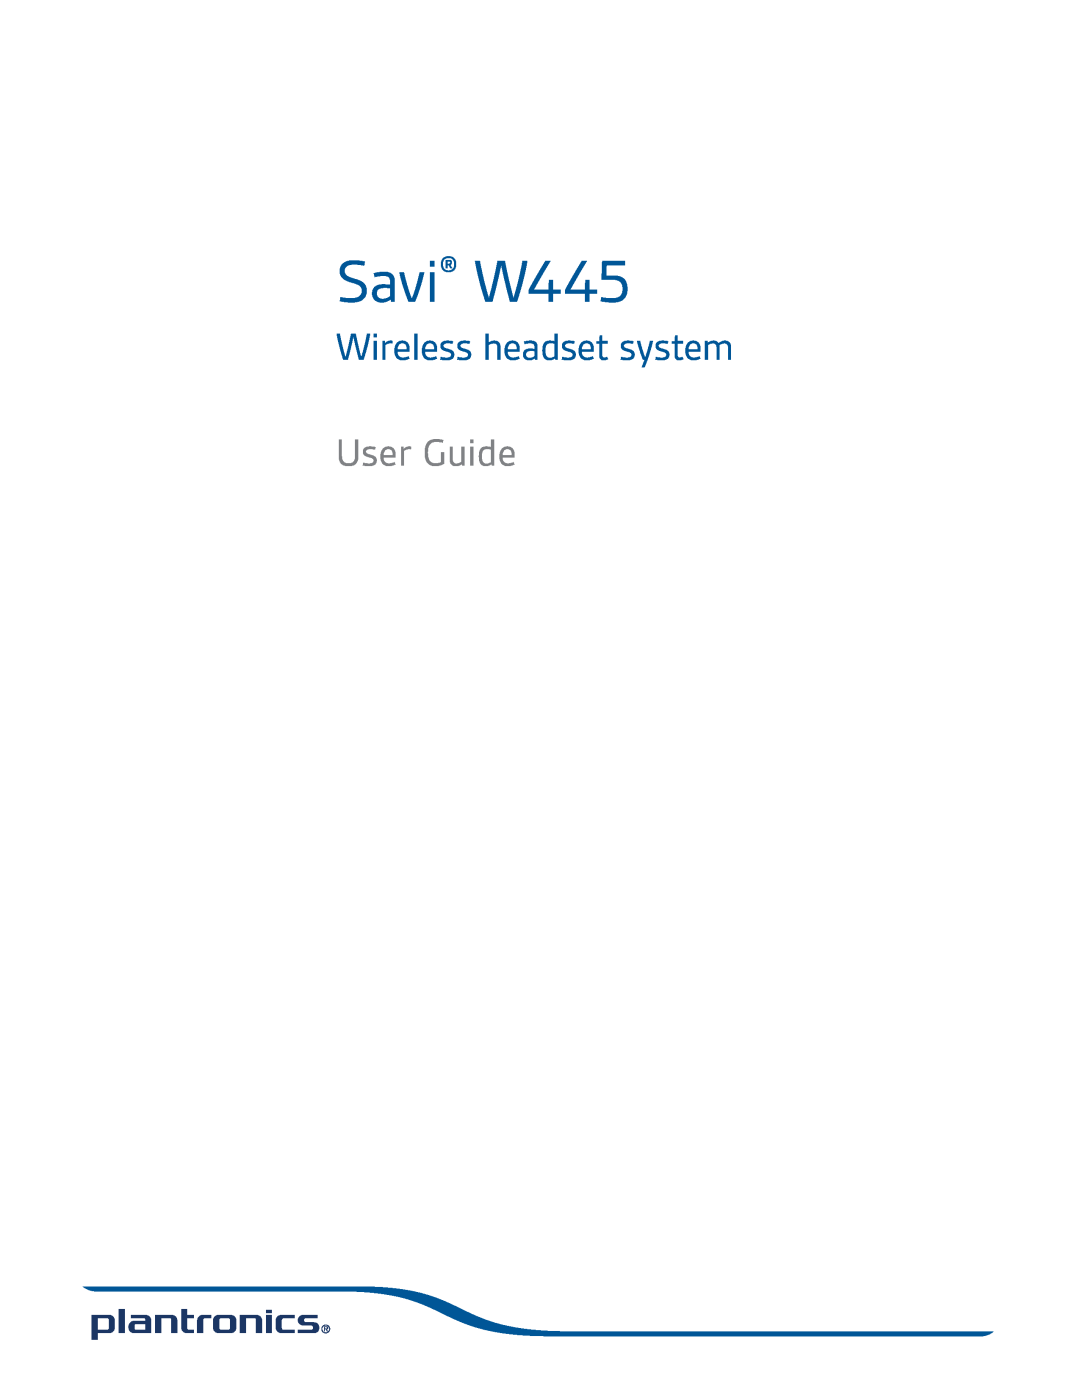 Plantronics manual Savi W445, Wireless headset system, User Guide 